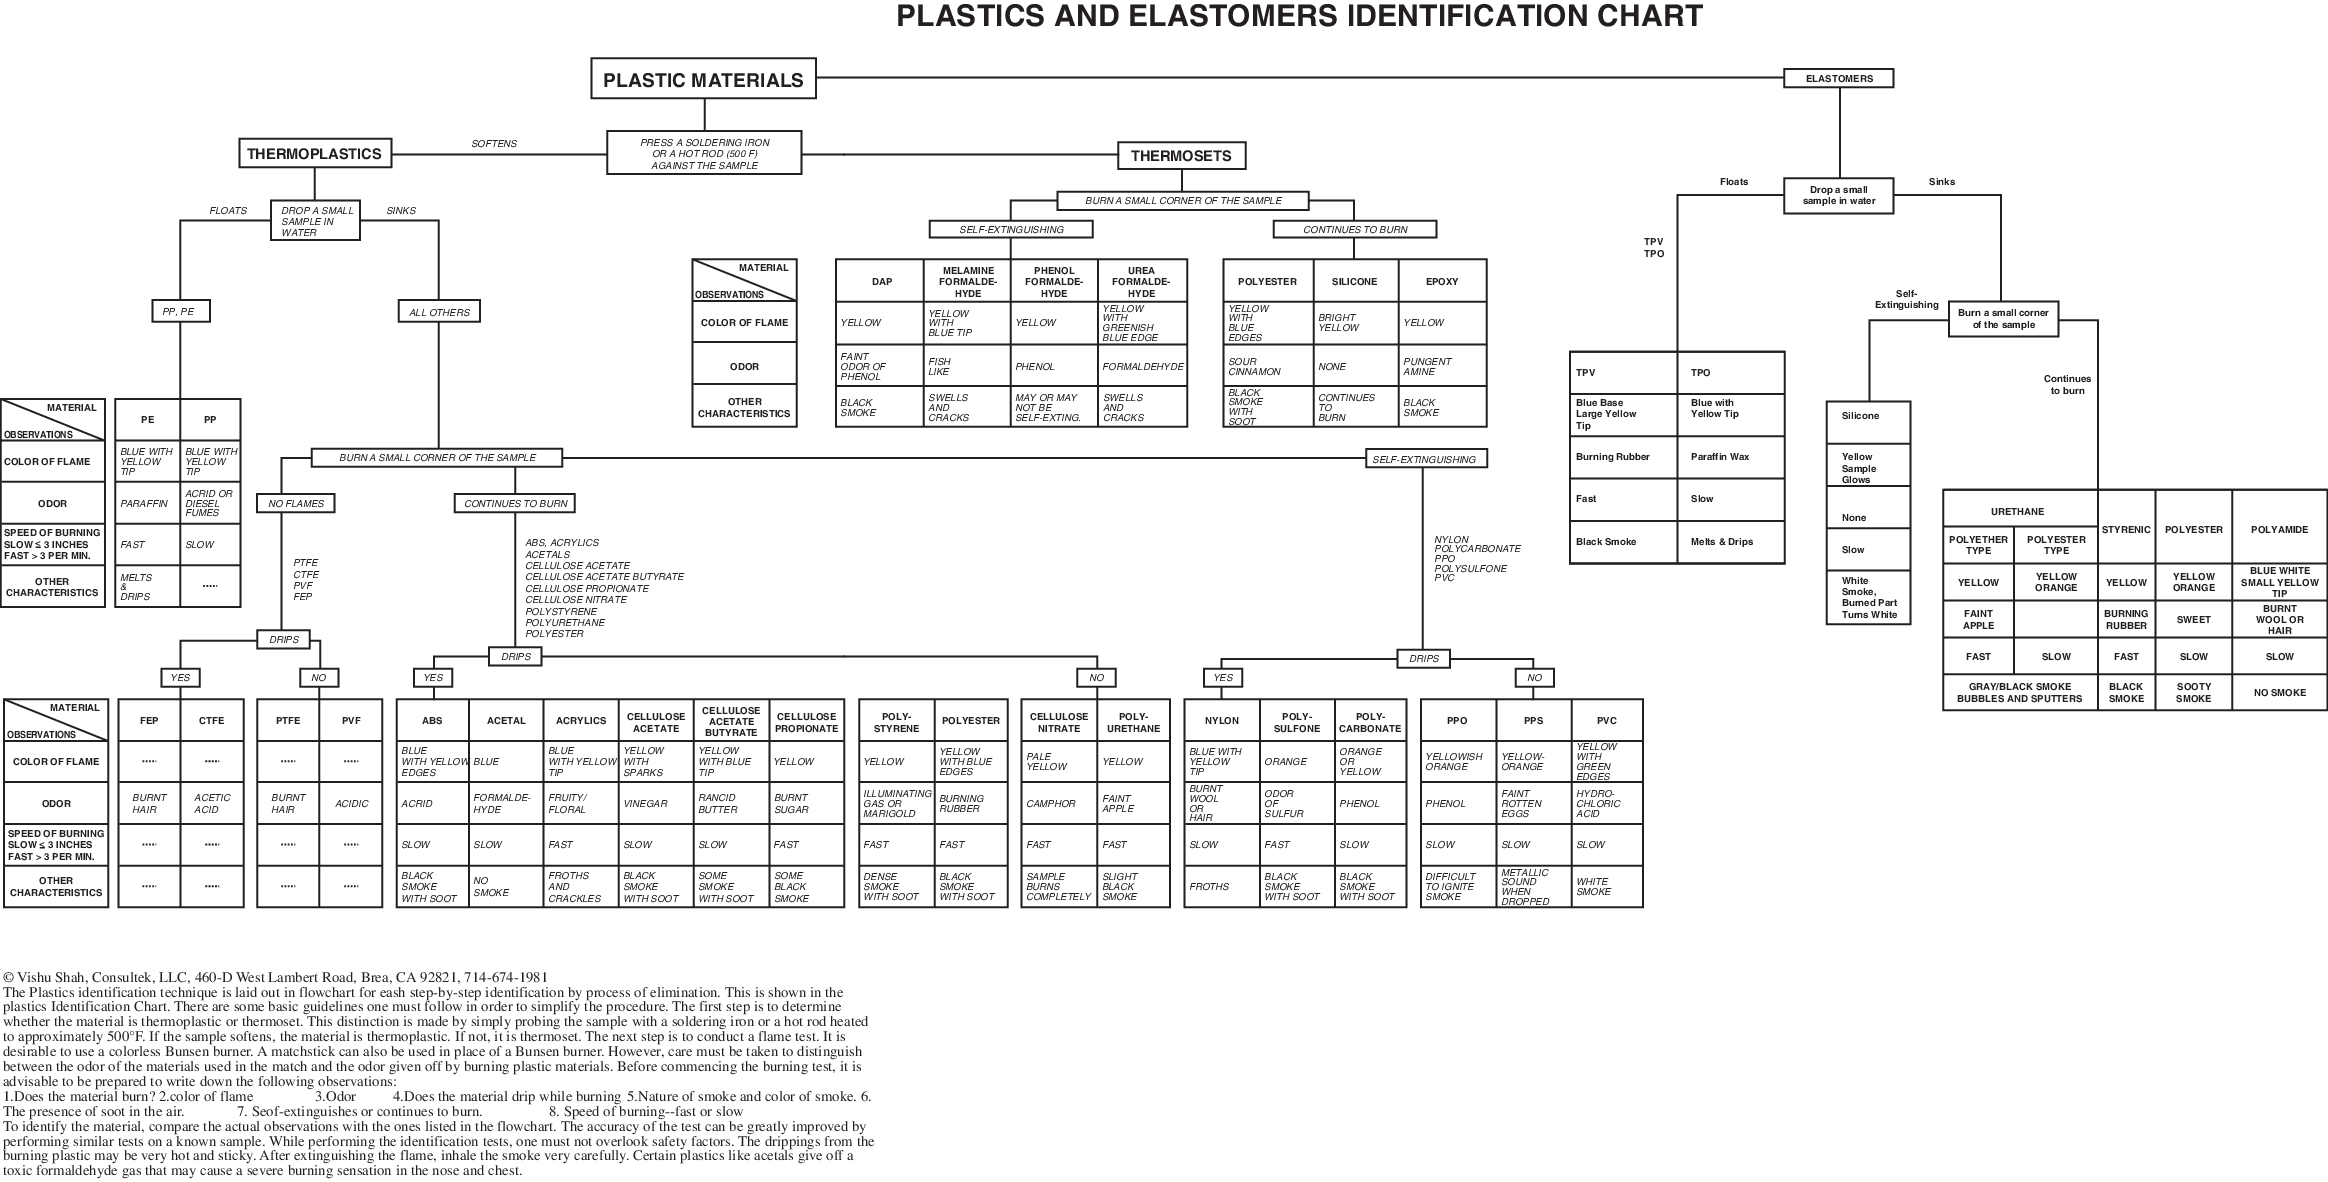 Plastic Identification Chart